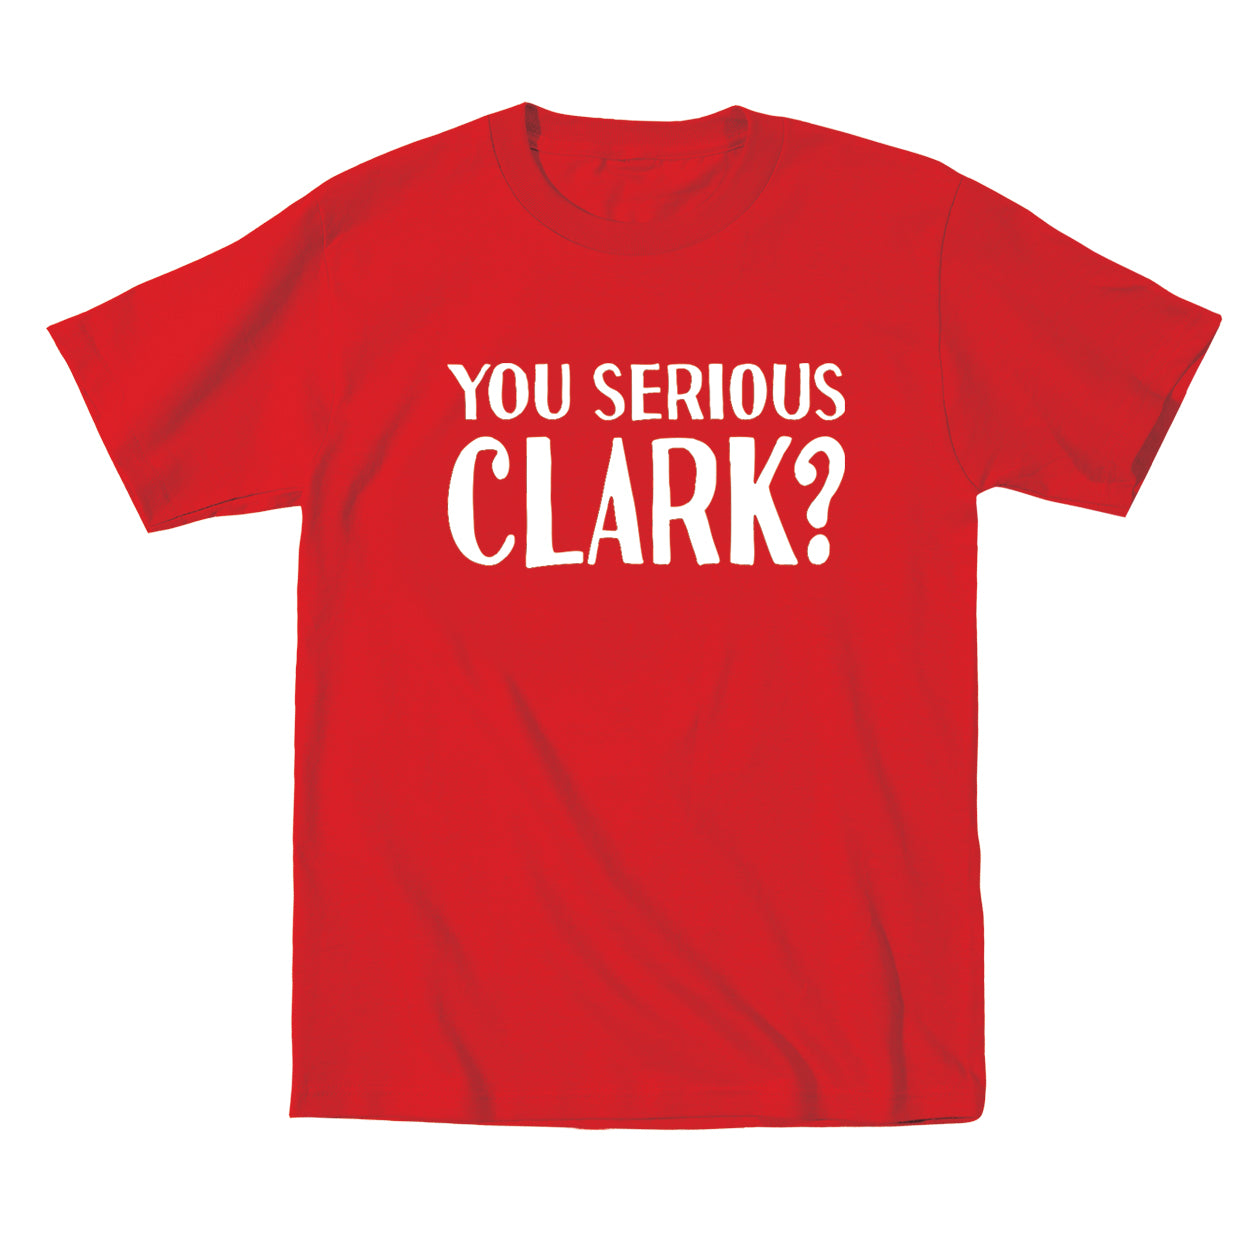 You Serious Clark - Baby Tshirt - Donkey Tees